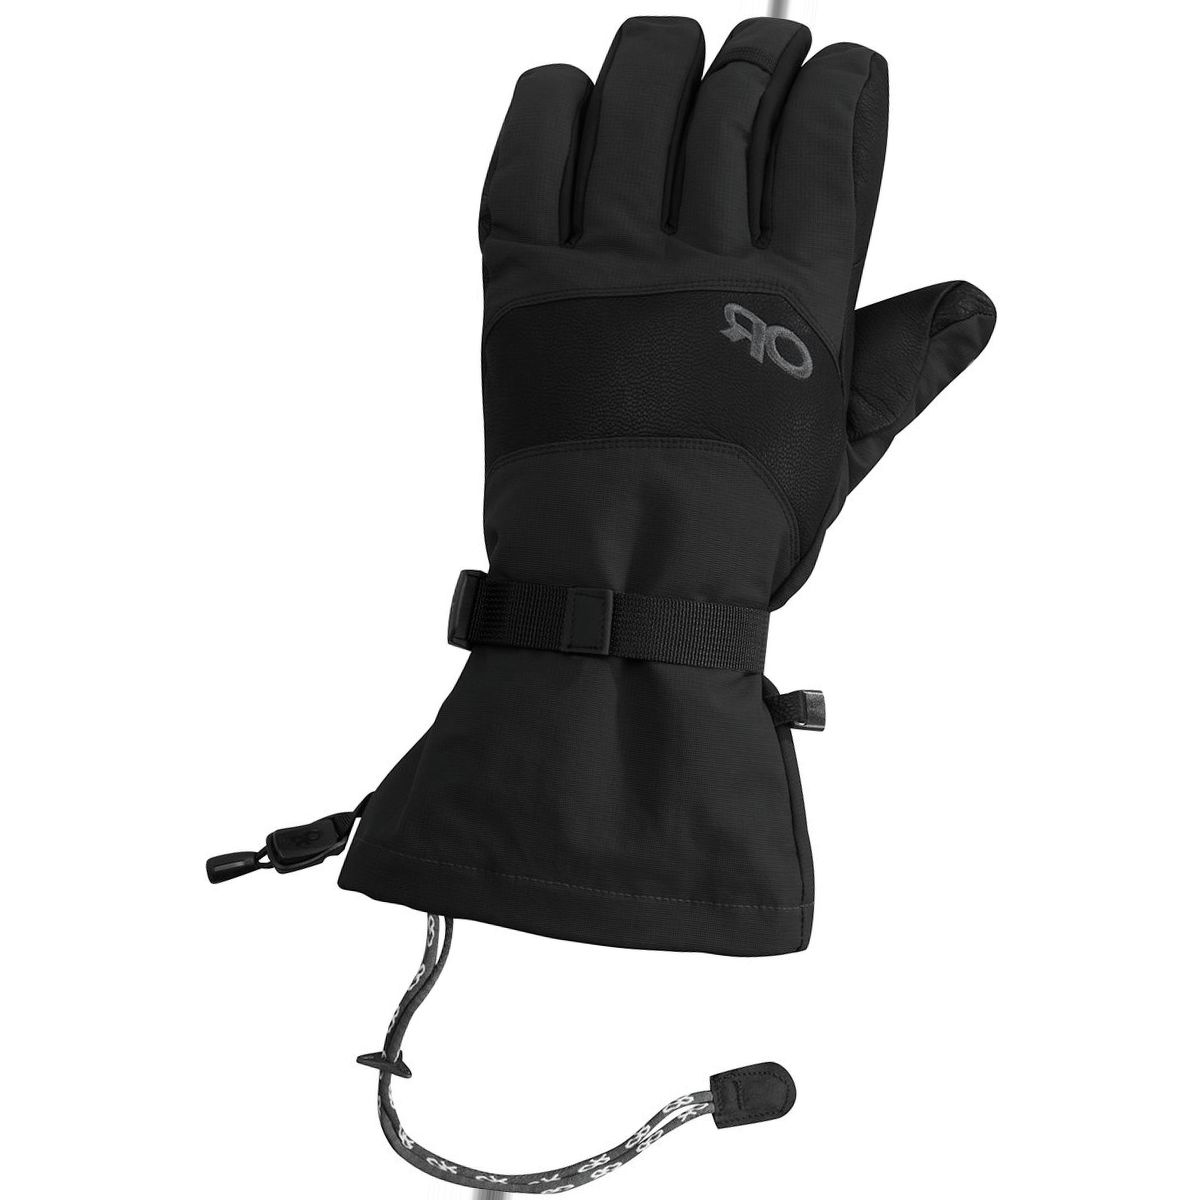 Outdoor Research HighCamp Glove - Men's